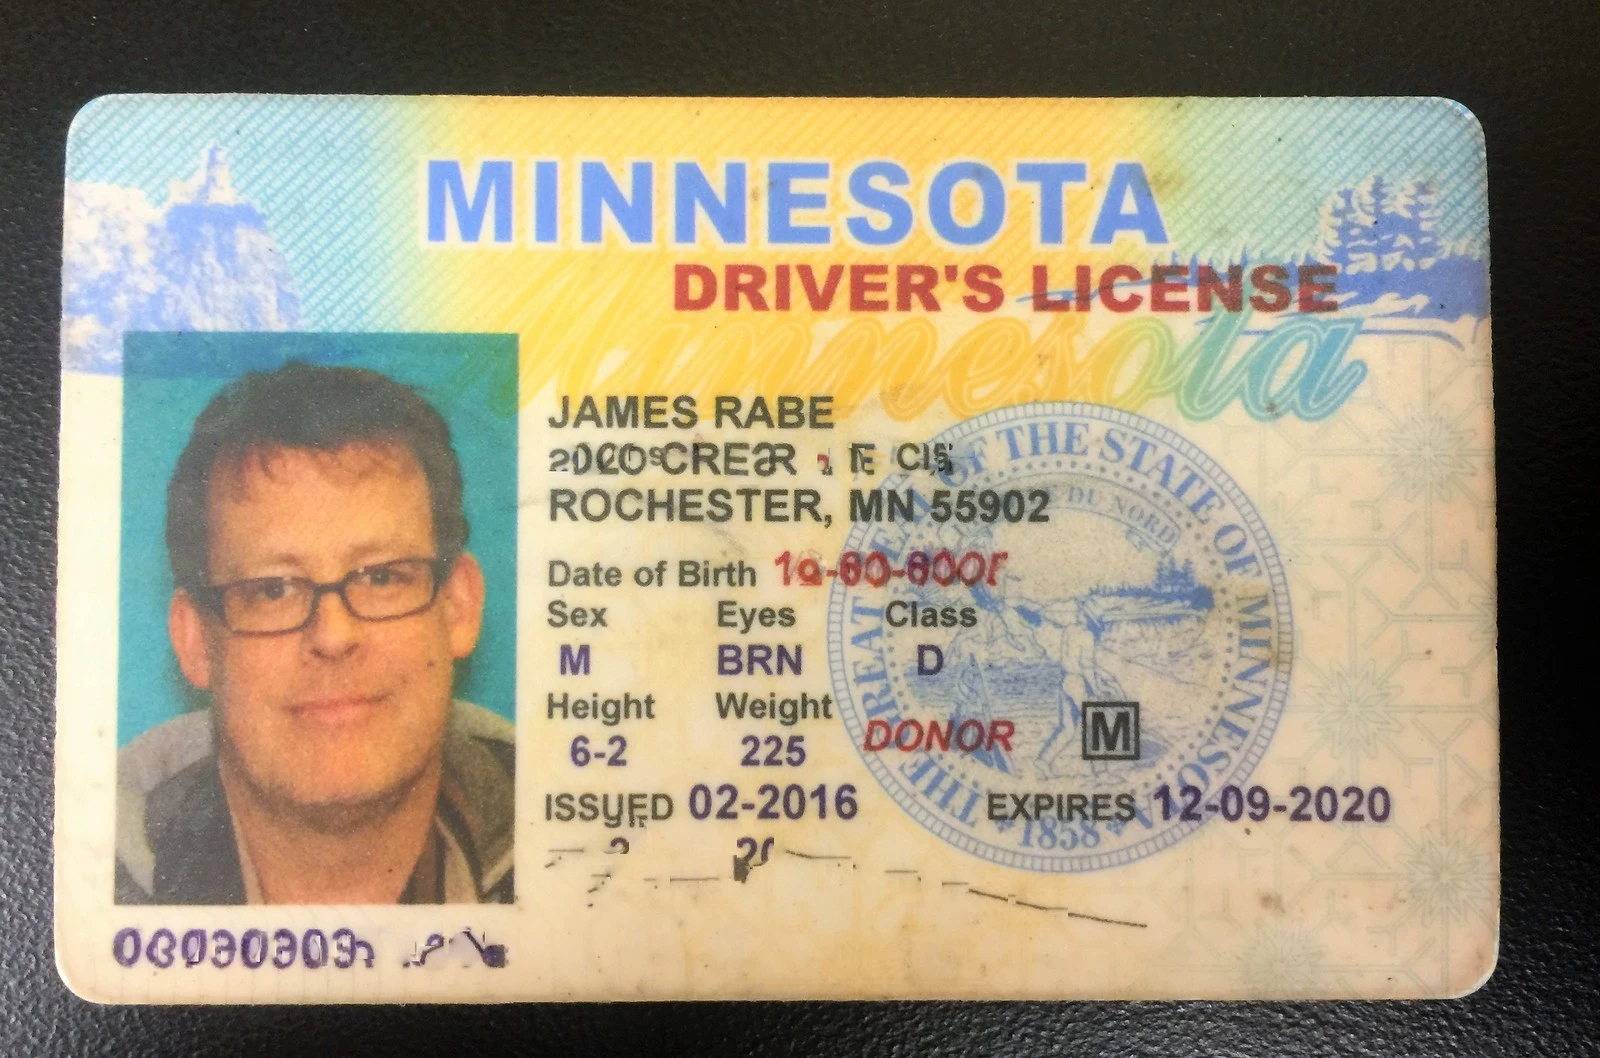 Minnesota Driver License